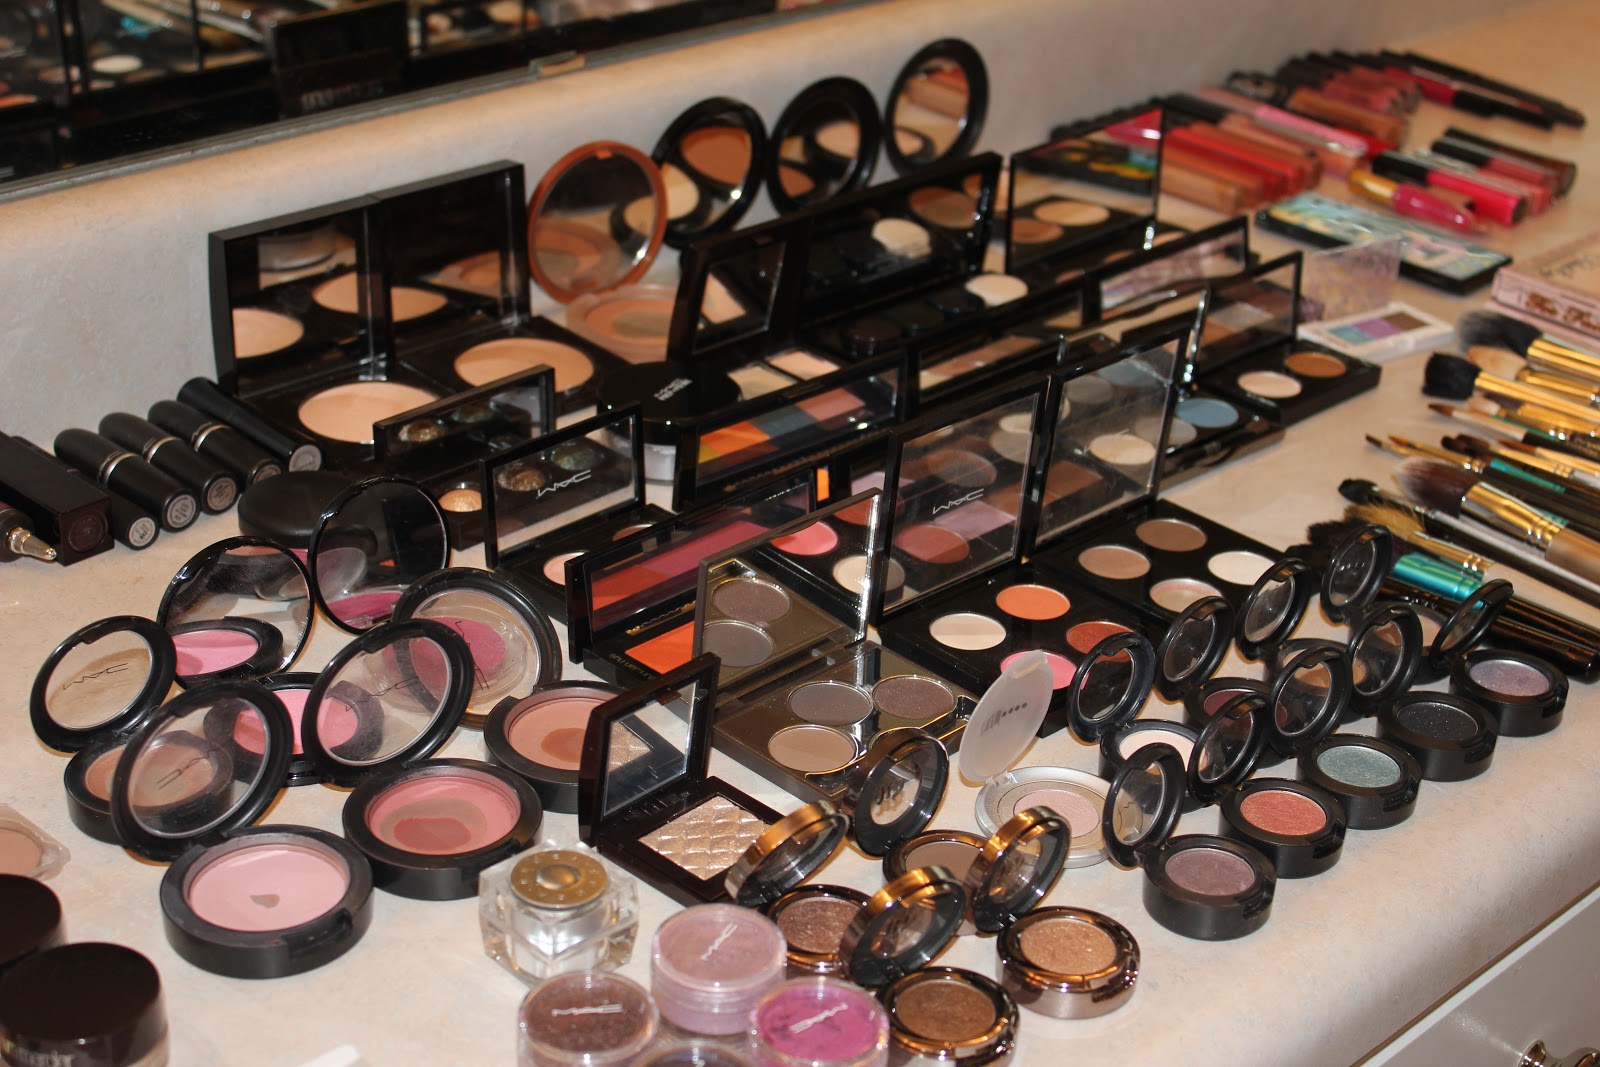 blushing basics: How To Clean & Sanitize your Makeup & Makeup Brushes